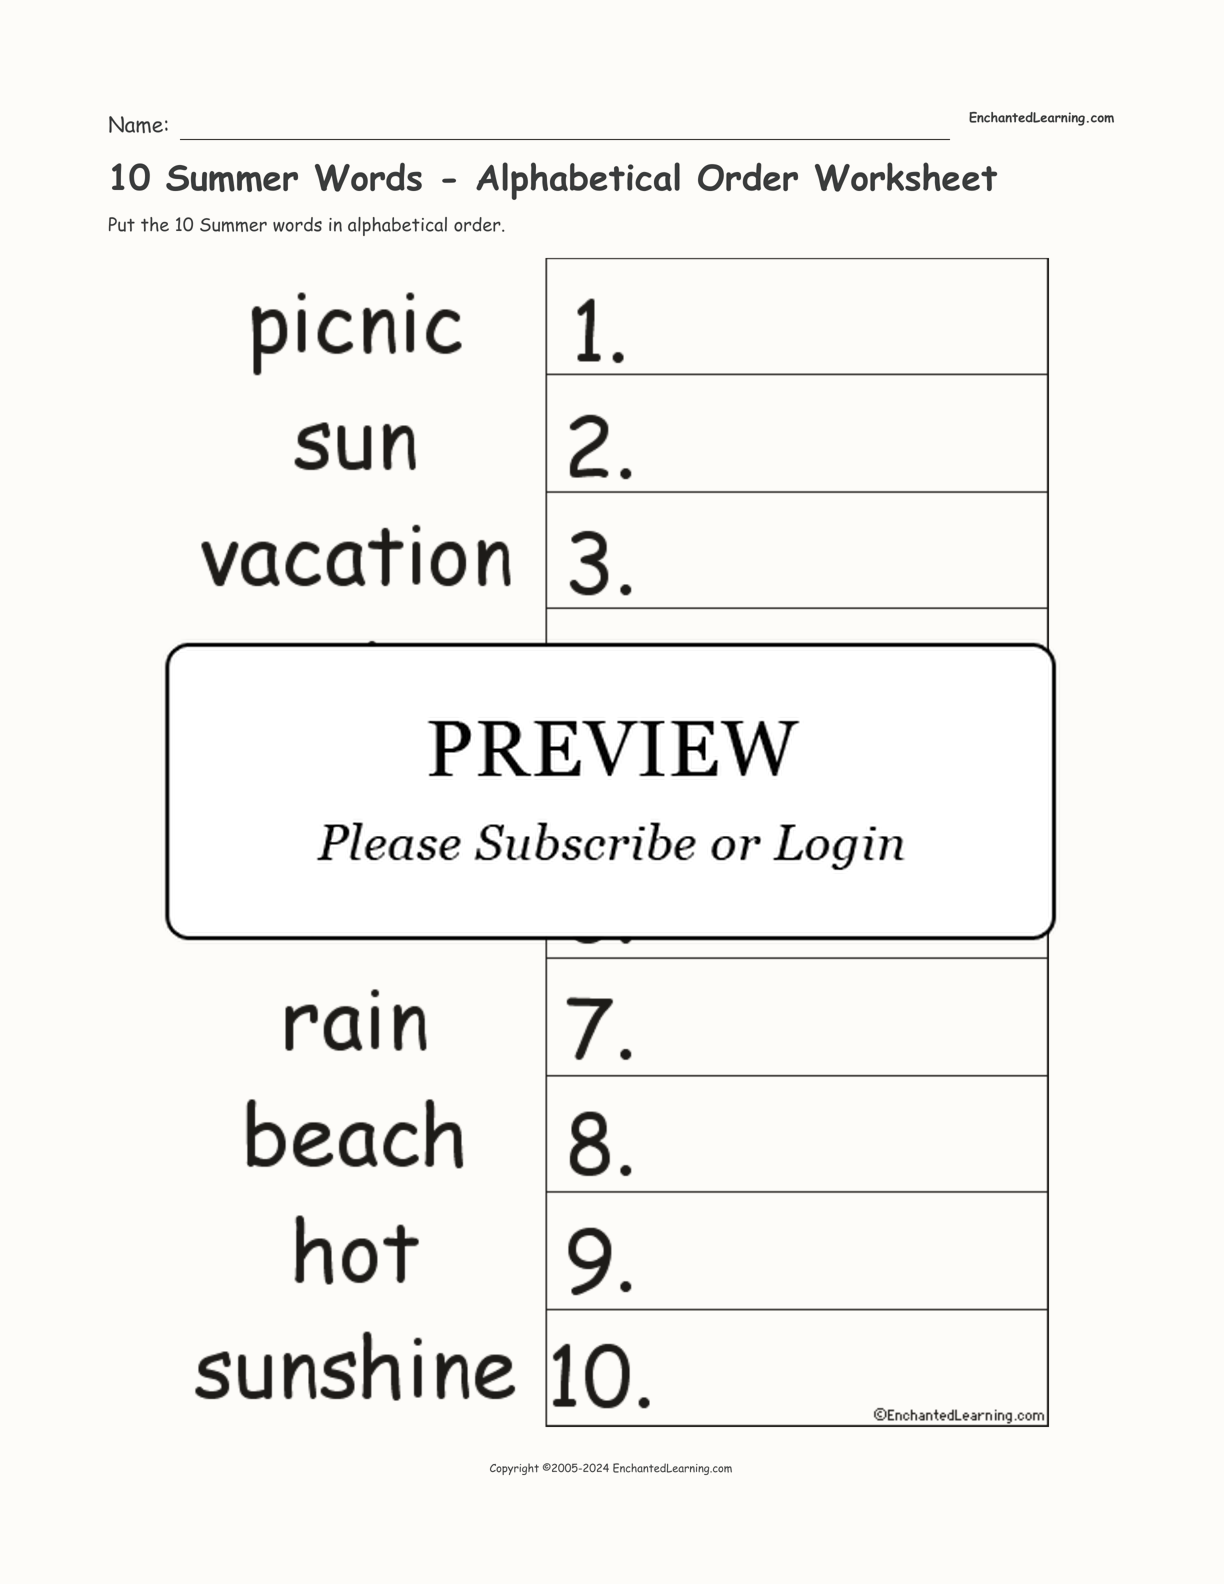 10 Summer Words - Alphabetical Order Worksheet interactive worksheet page 1